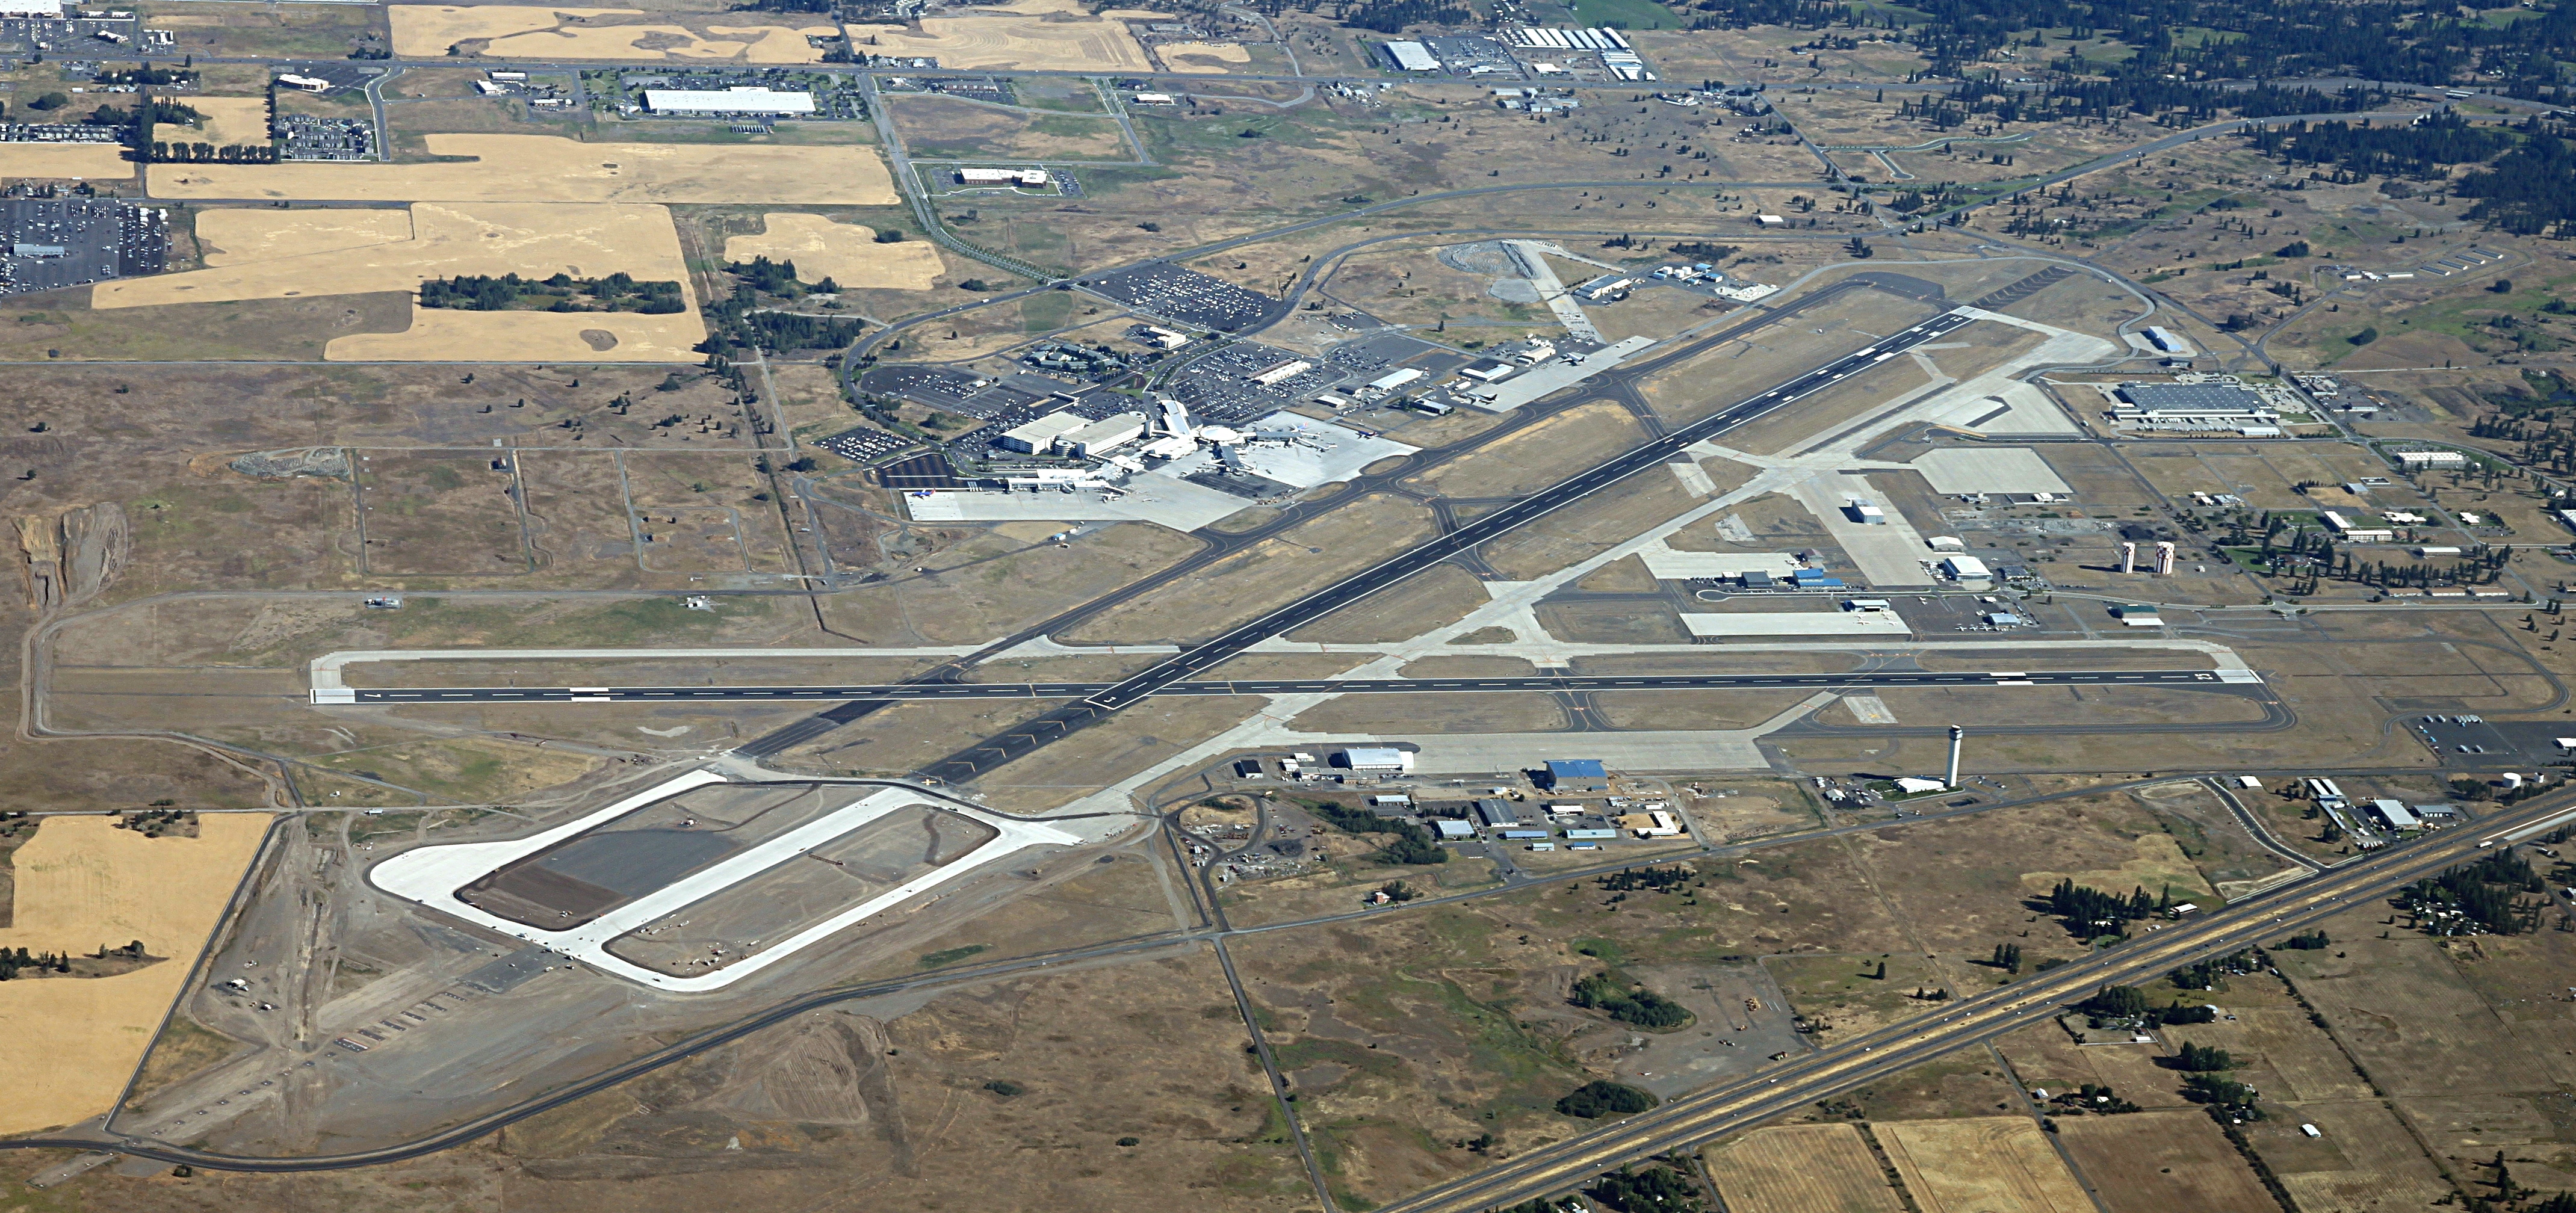 Spokane Airport consists of two runways.